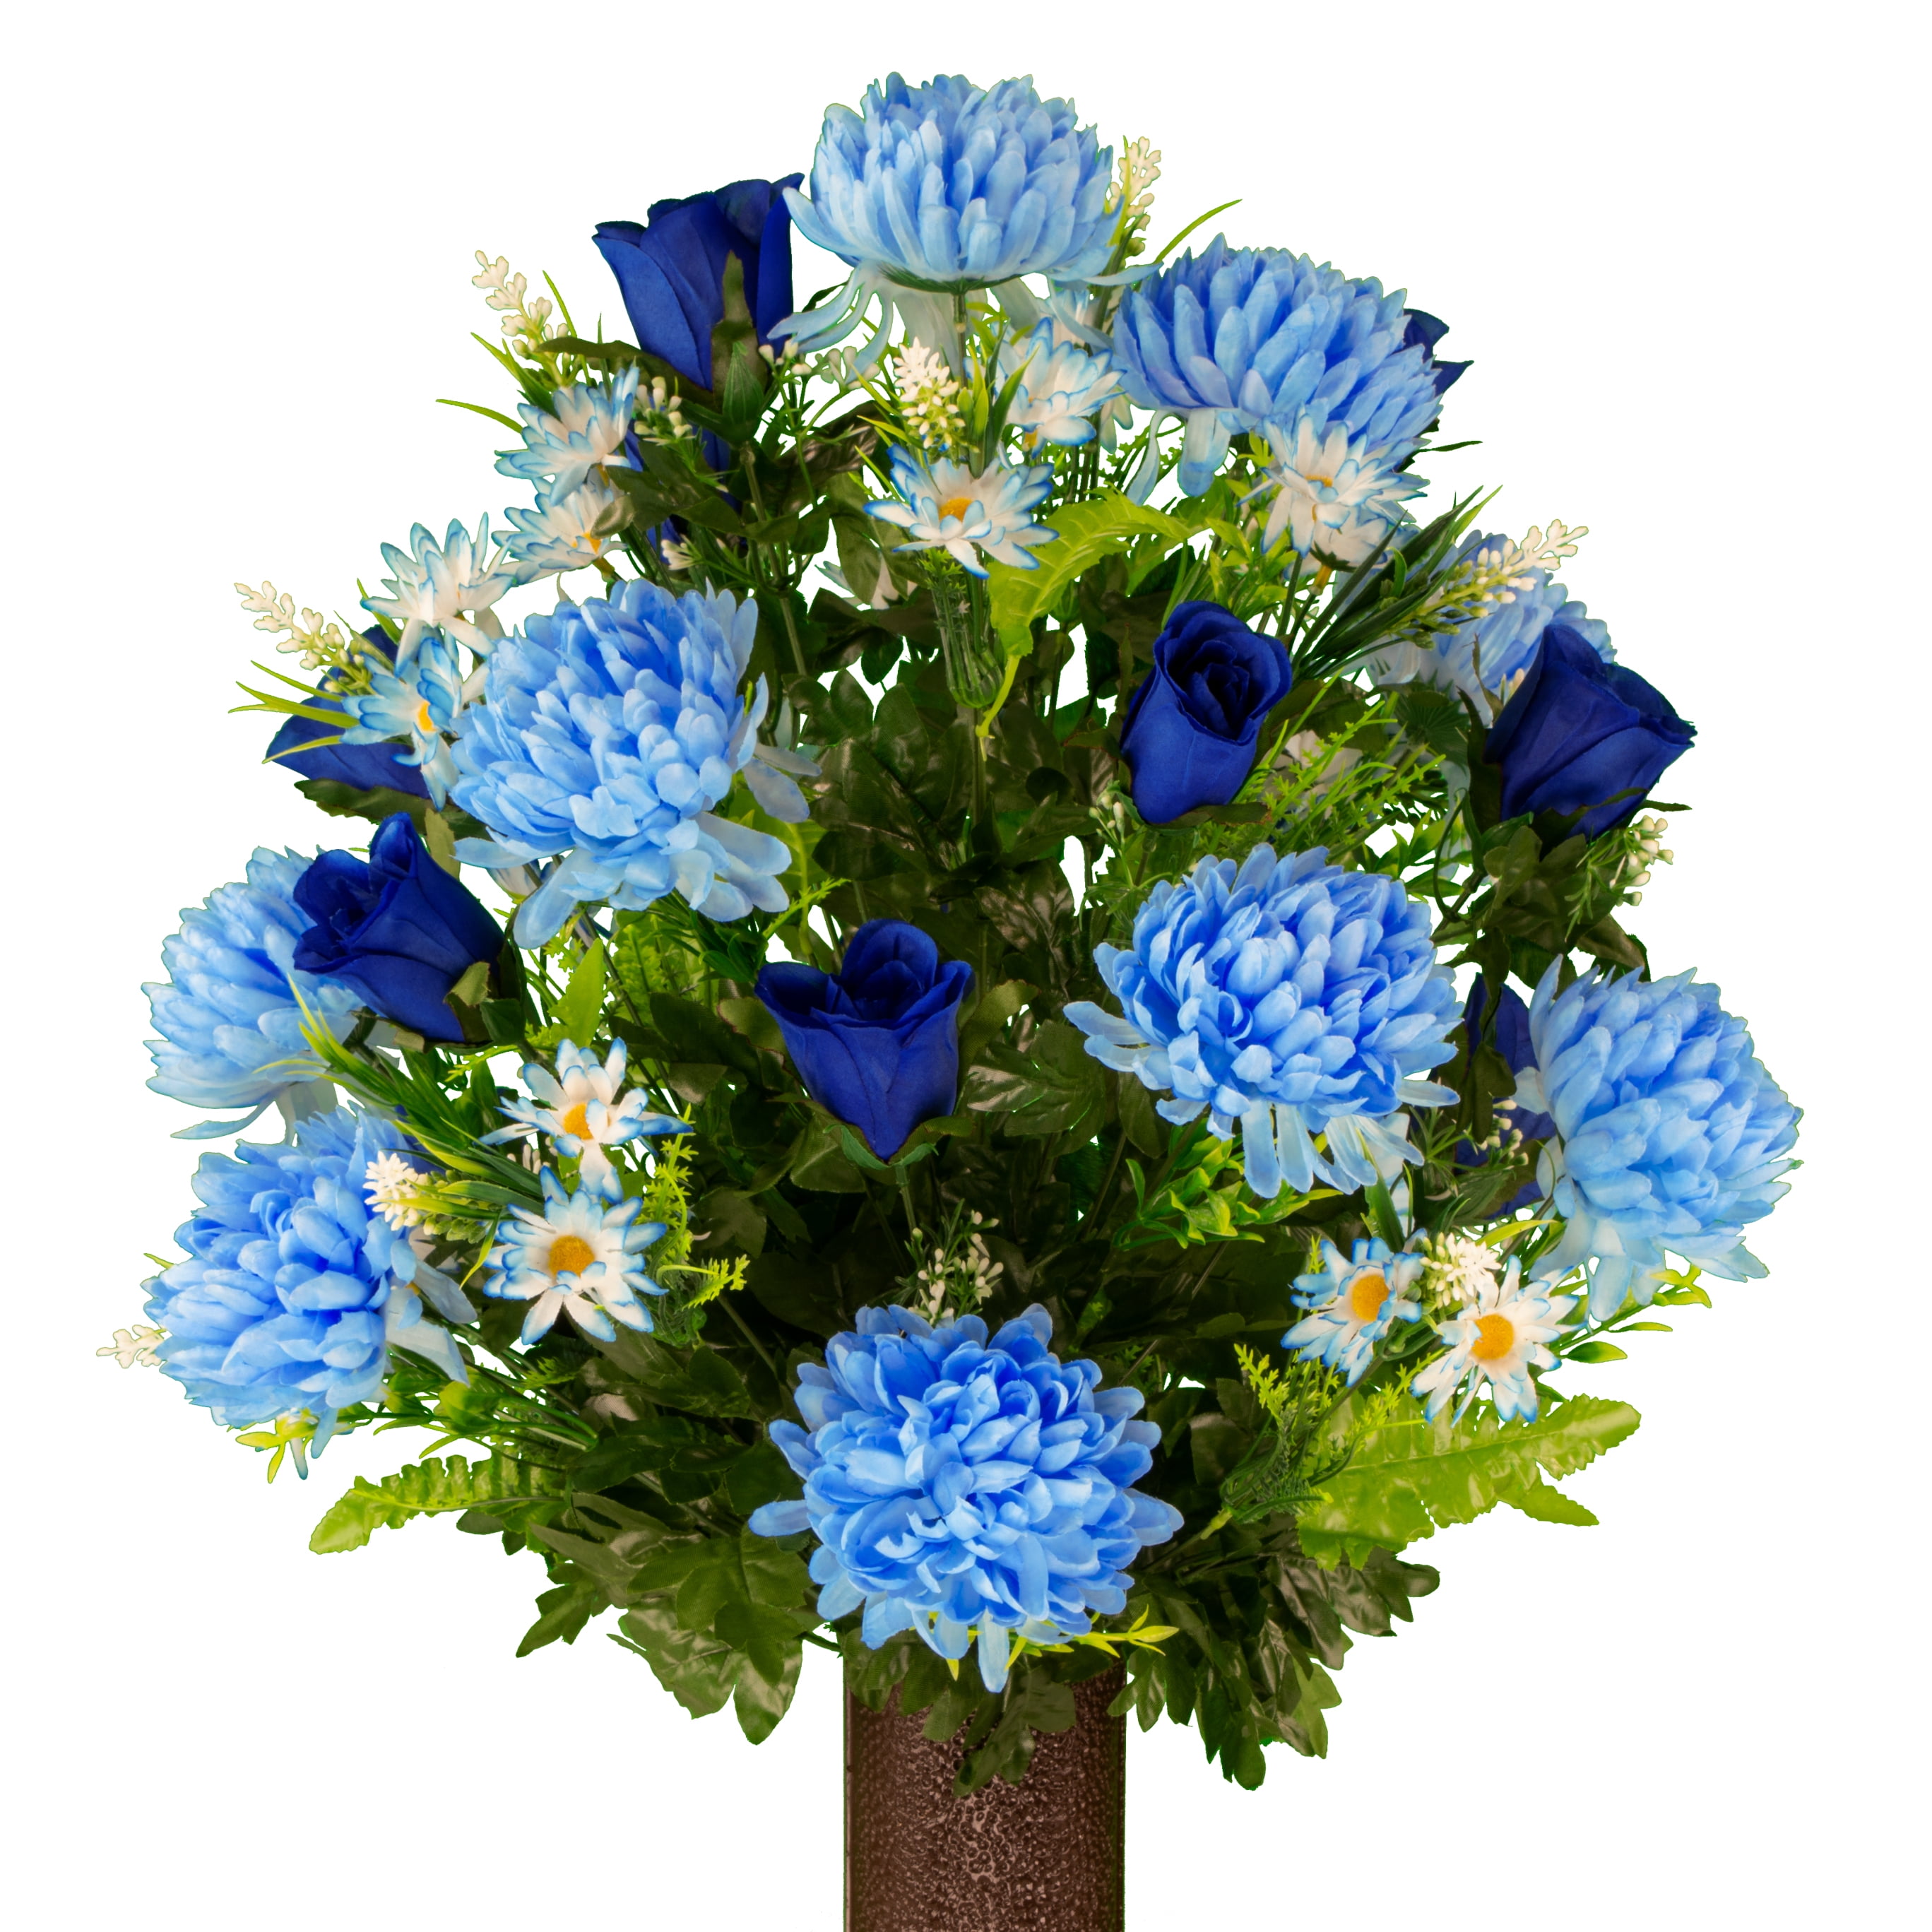 ROYAL BLUE ROSES SILK FUNERAL FLOWERS HEART WREATH MEMORIAL ARTIFICIAL GRAVE 